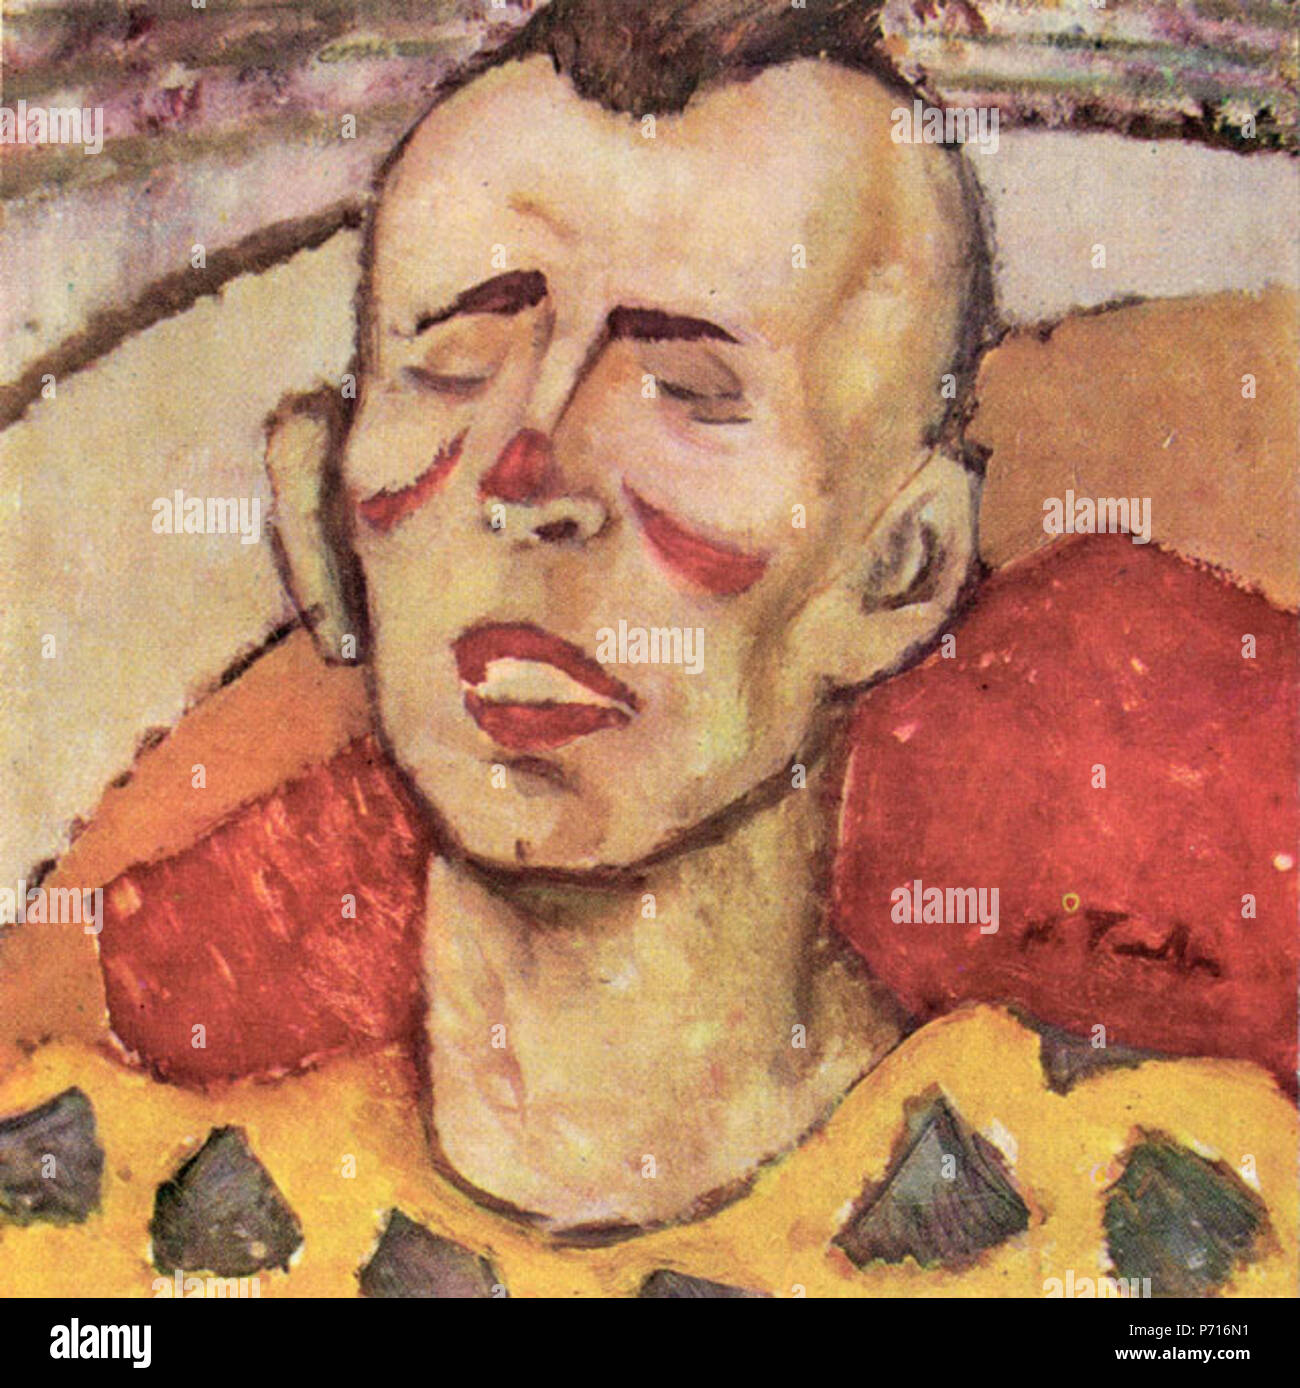 Român: Nicolae Tonitza (1886 - 1940) - Clown. Oil on cardboard, 0.340 x 0.340 . 1925 (see Raoul orban, Nicolae Tonitza, Meridiane, 1965) 43 Nicolae Tonitza - Clown Stock Photo